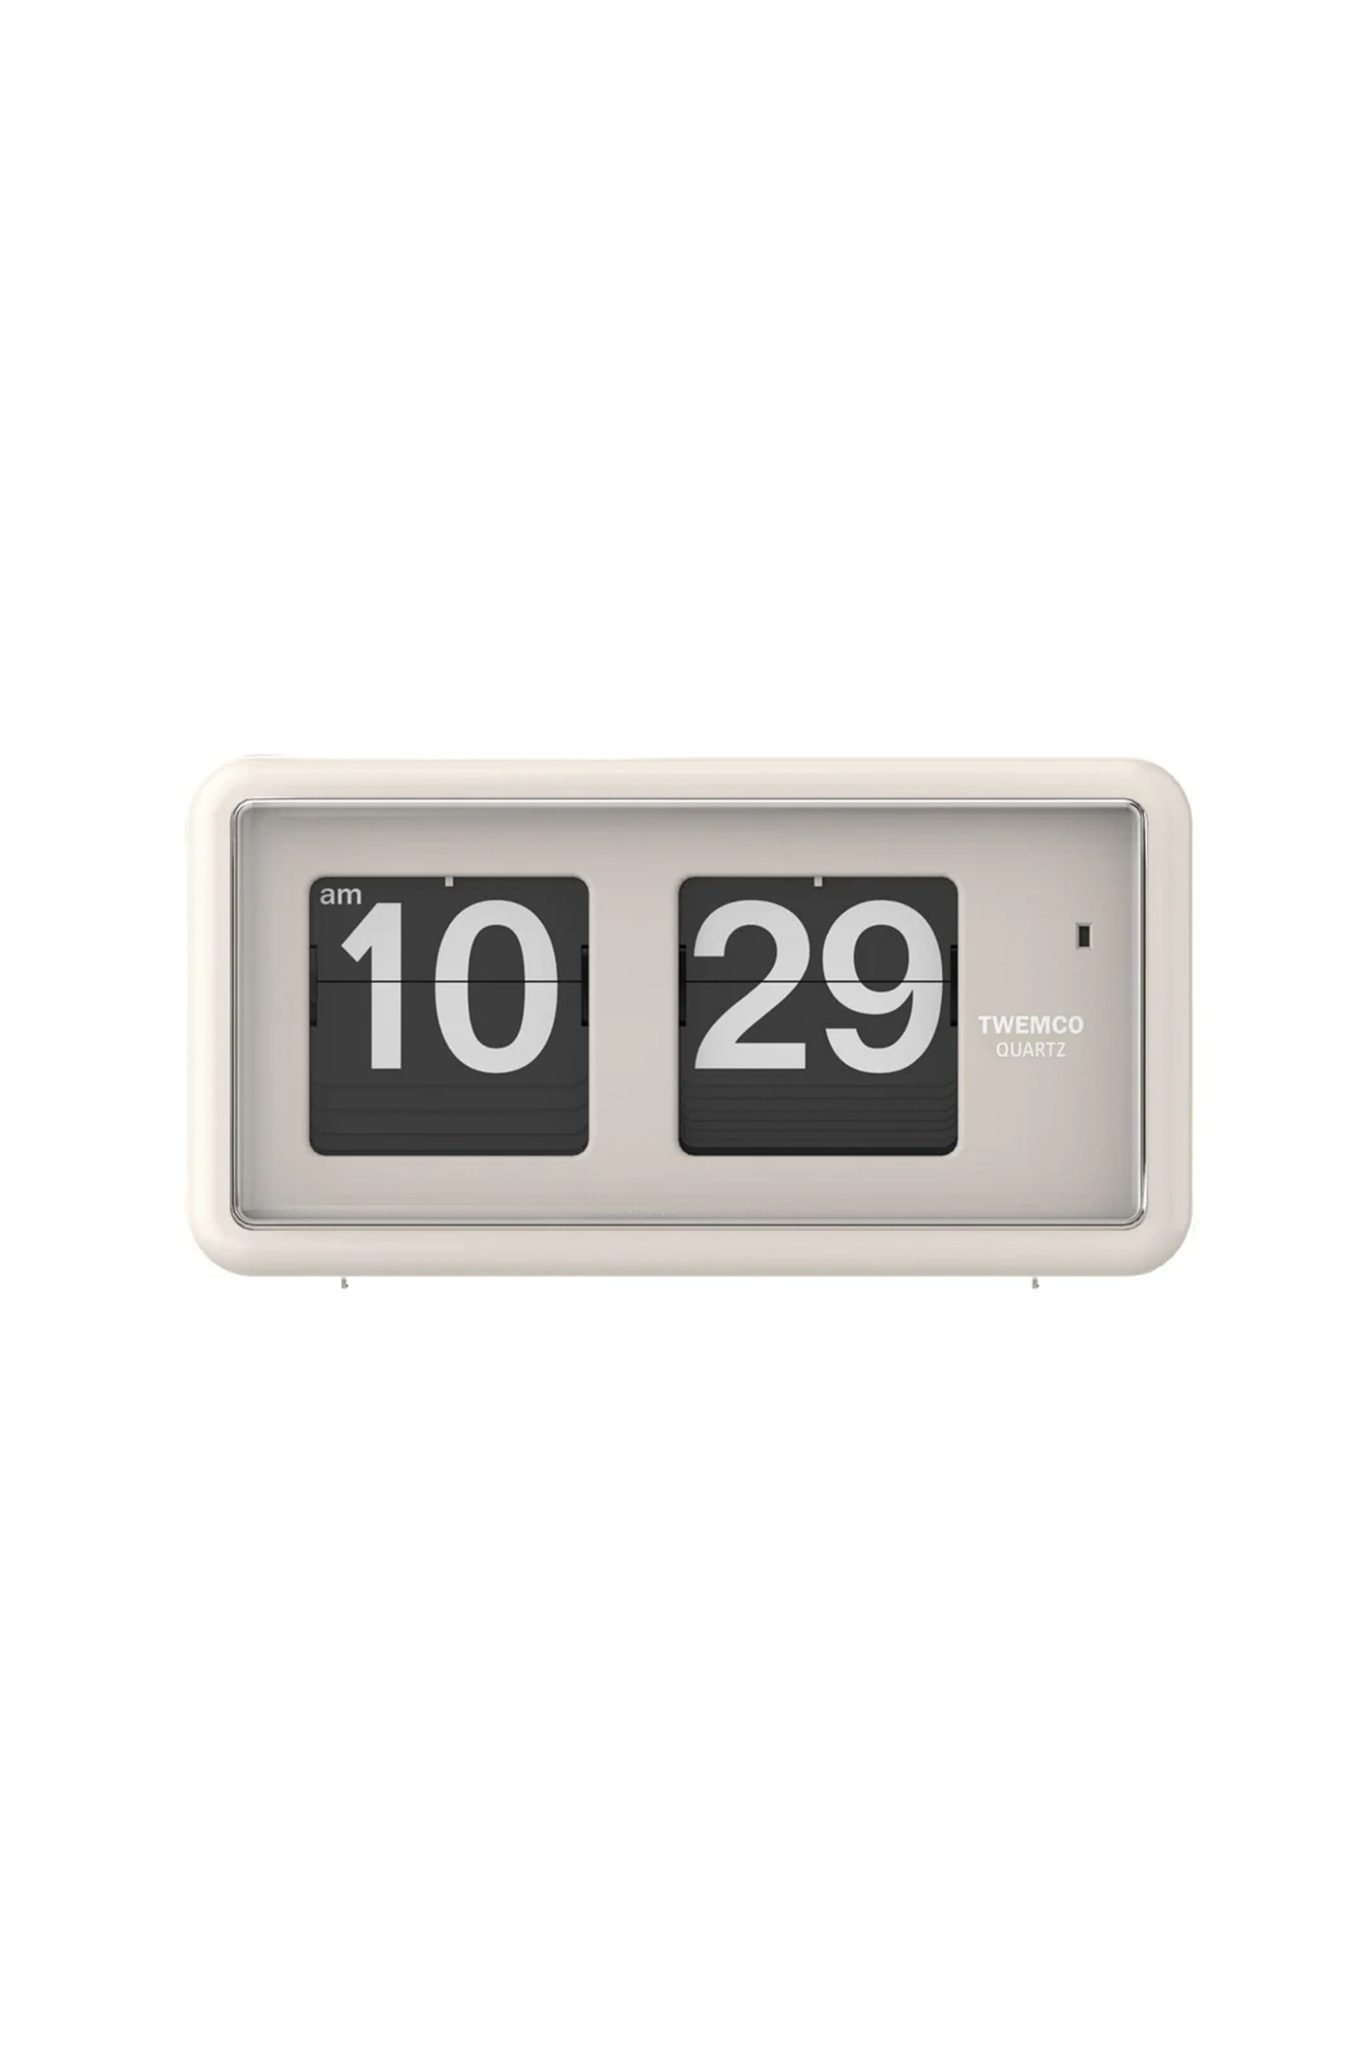 TWEMCO Classic Table Flip Clock QT-30 (PRE-ORDER)